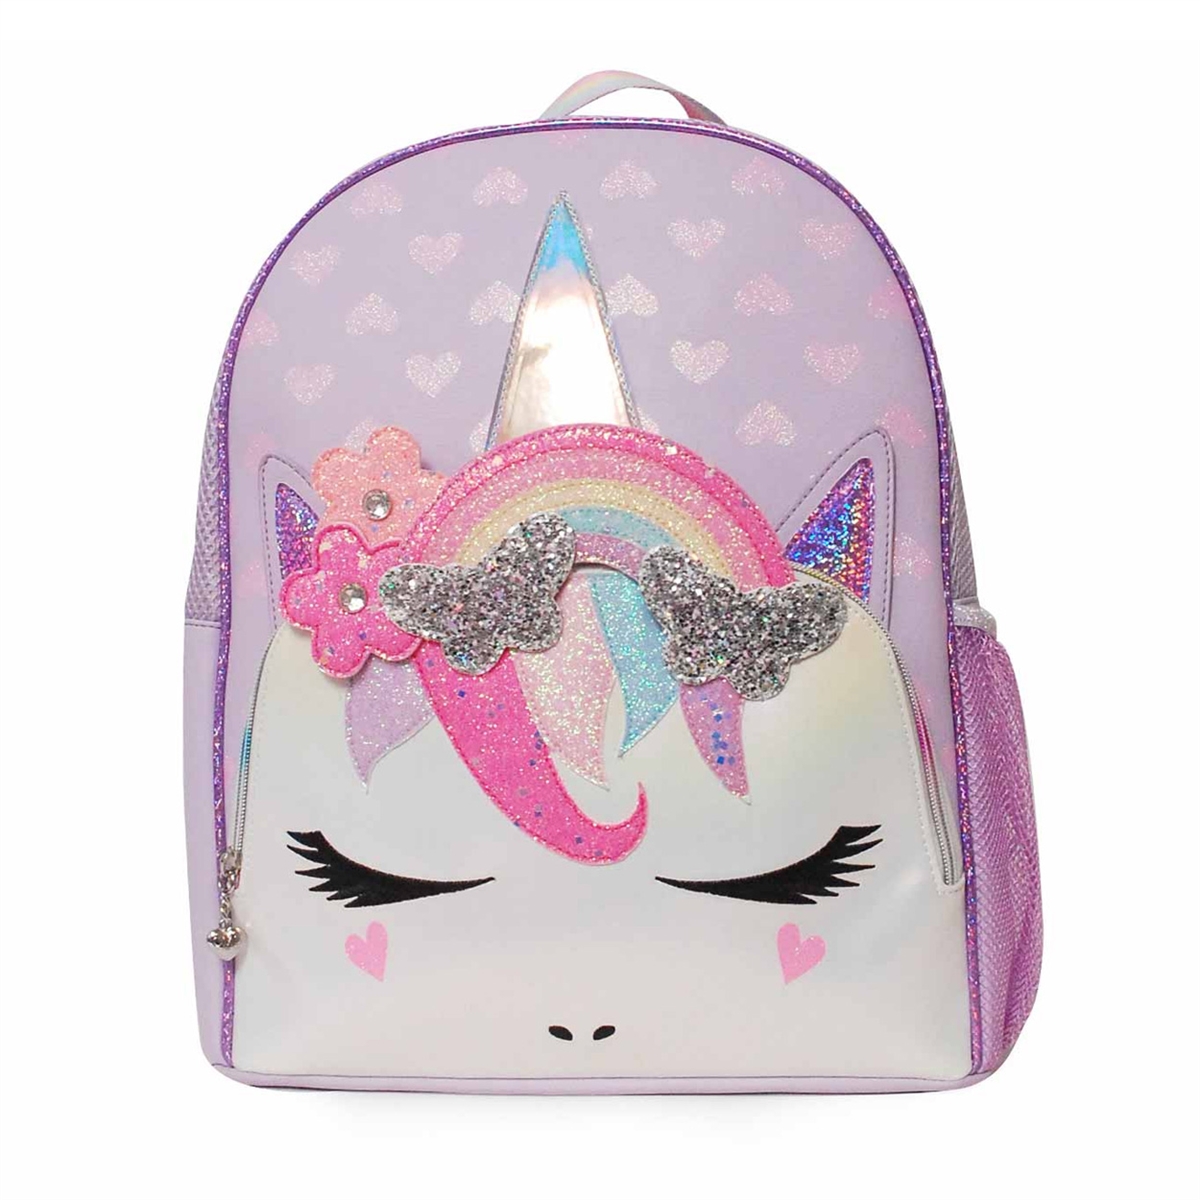 Pink Omg Girls Colorblock Hologram Coated Backpack, Accessories